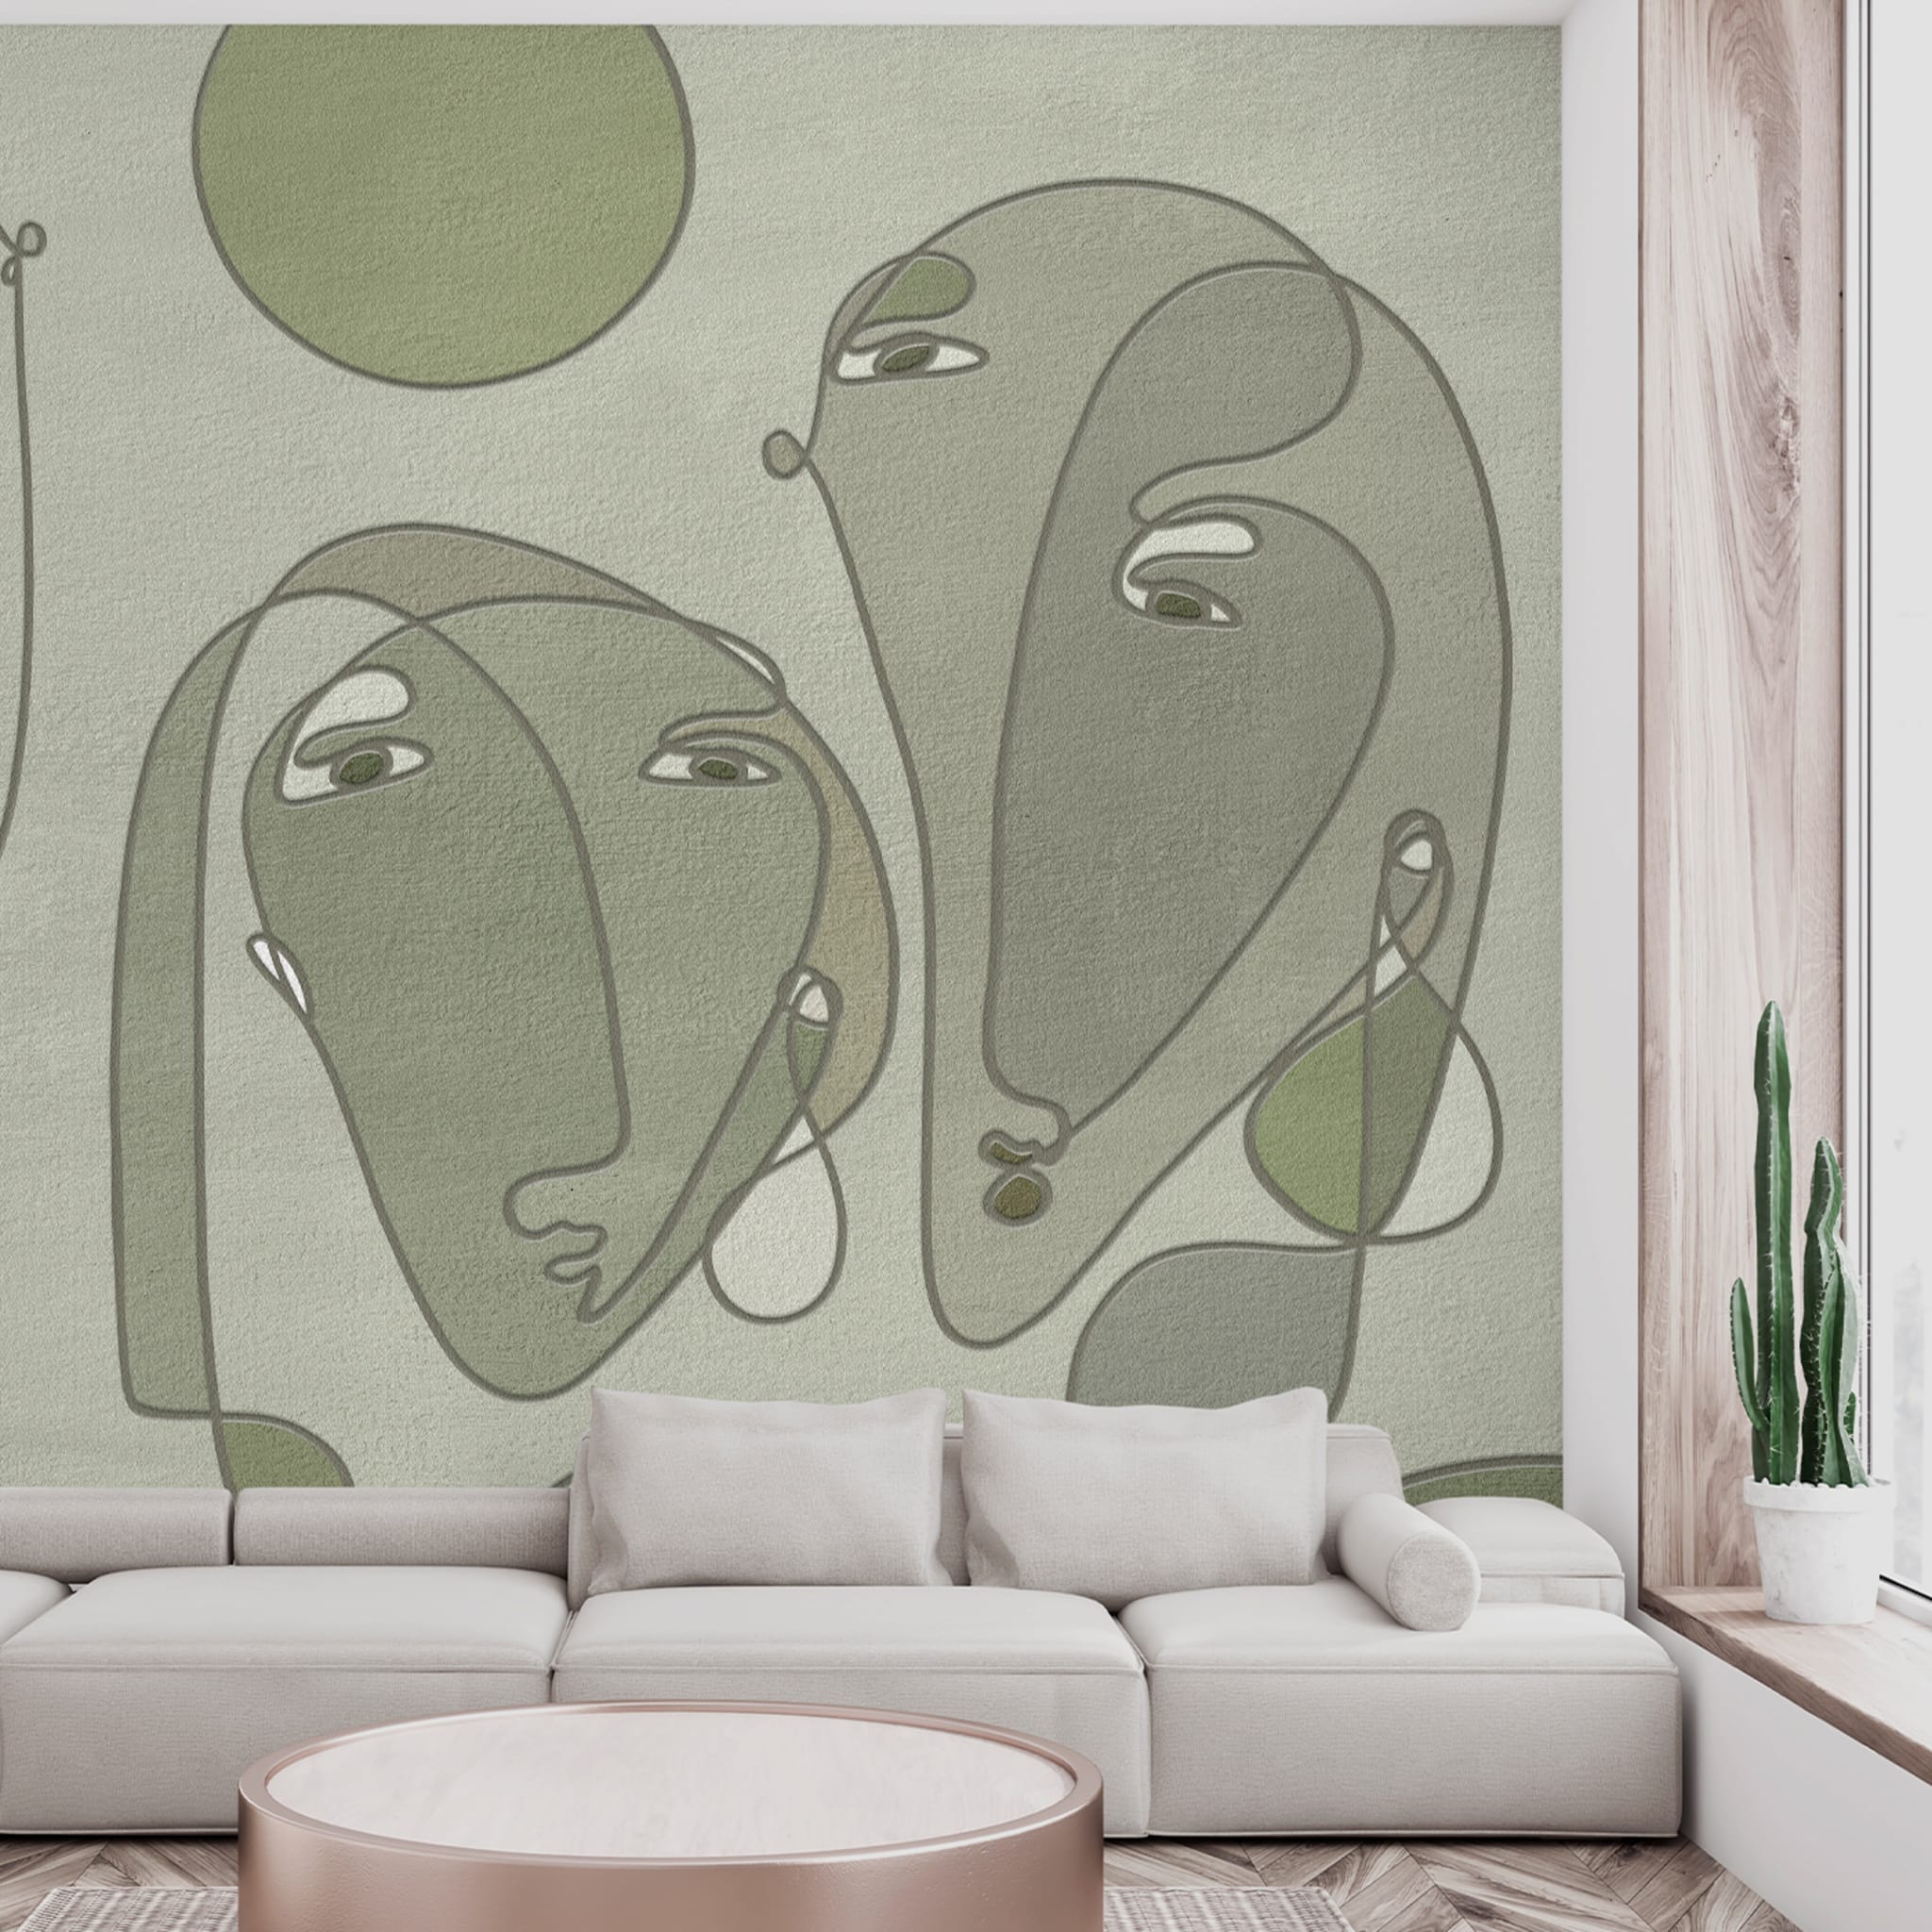 Olive green singular faces textured wallpaper - Alternative view 1